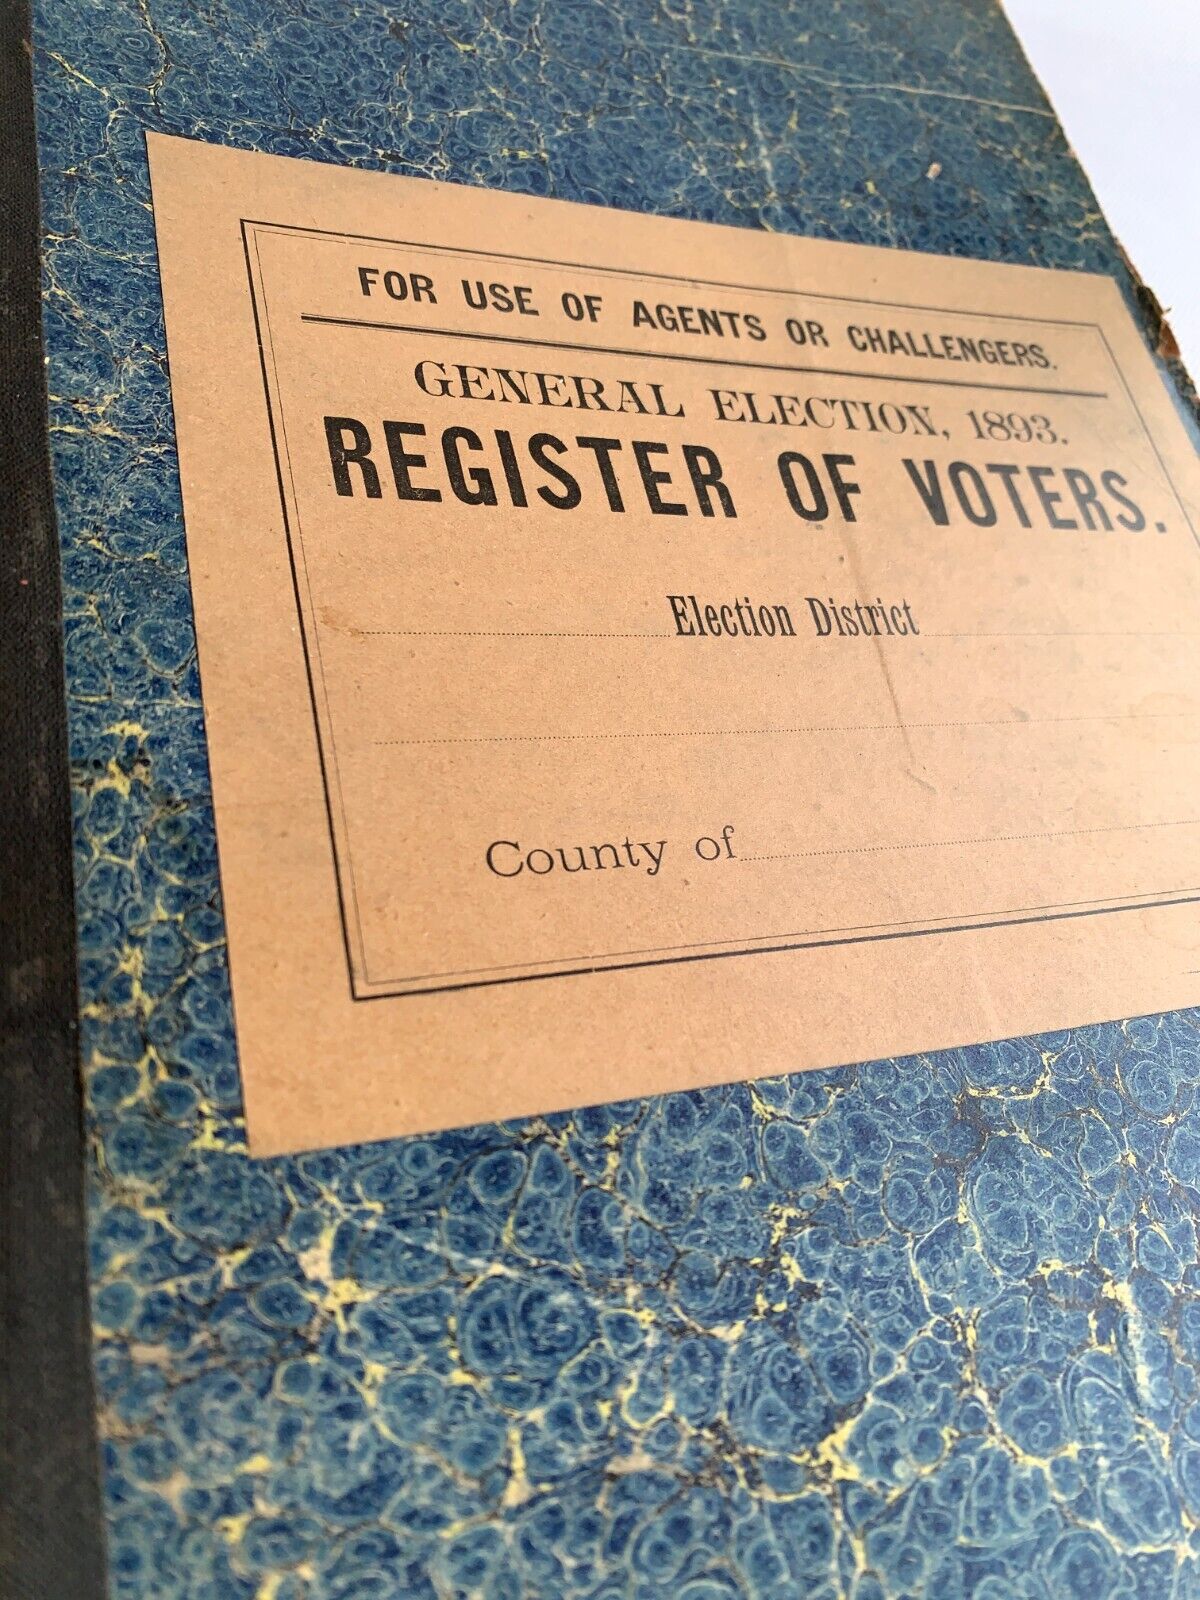 1893 Voter Registration Logbook, Antique Register of Voters, Rare Suffrage Era